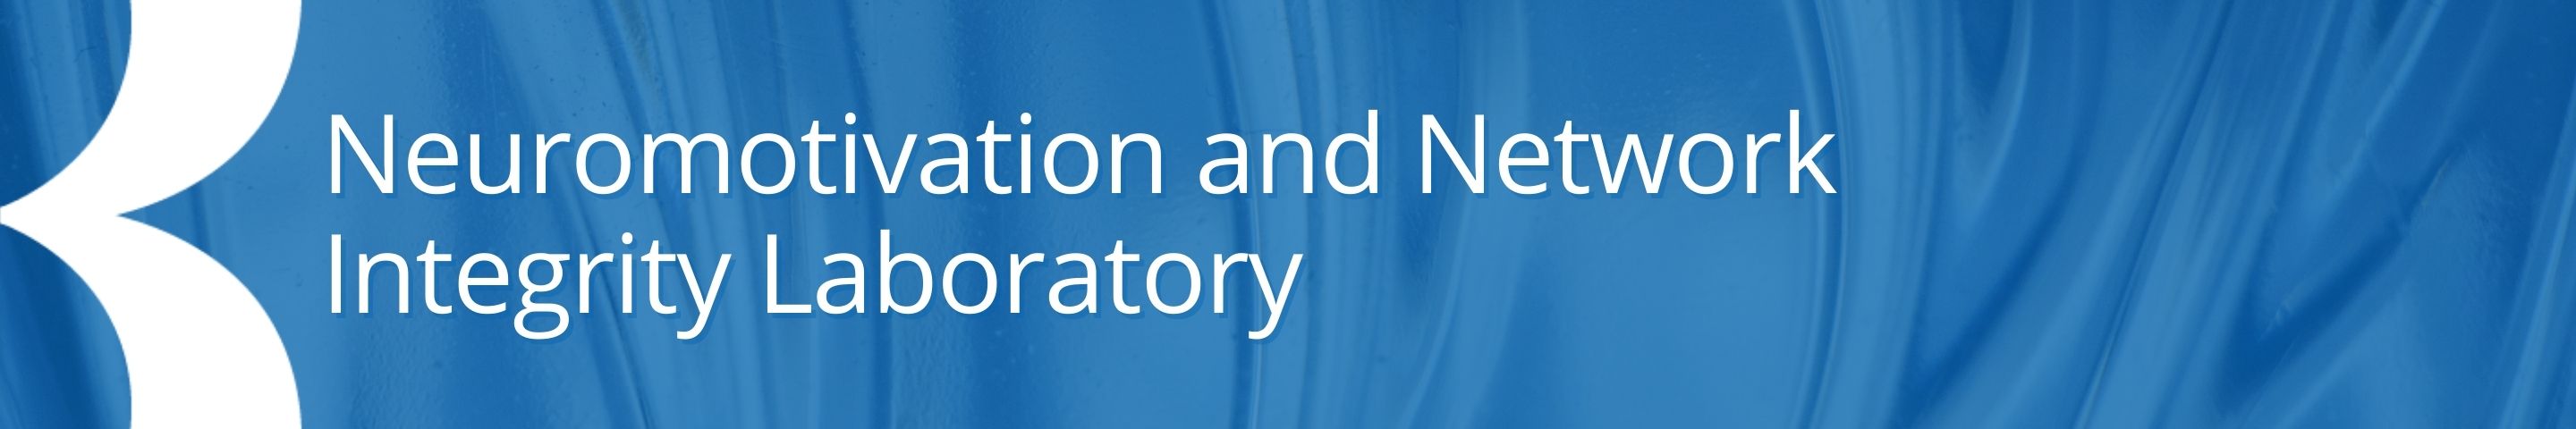 blue banner neuromotivation network integrity laboratory